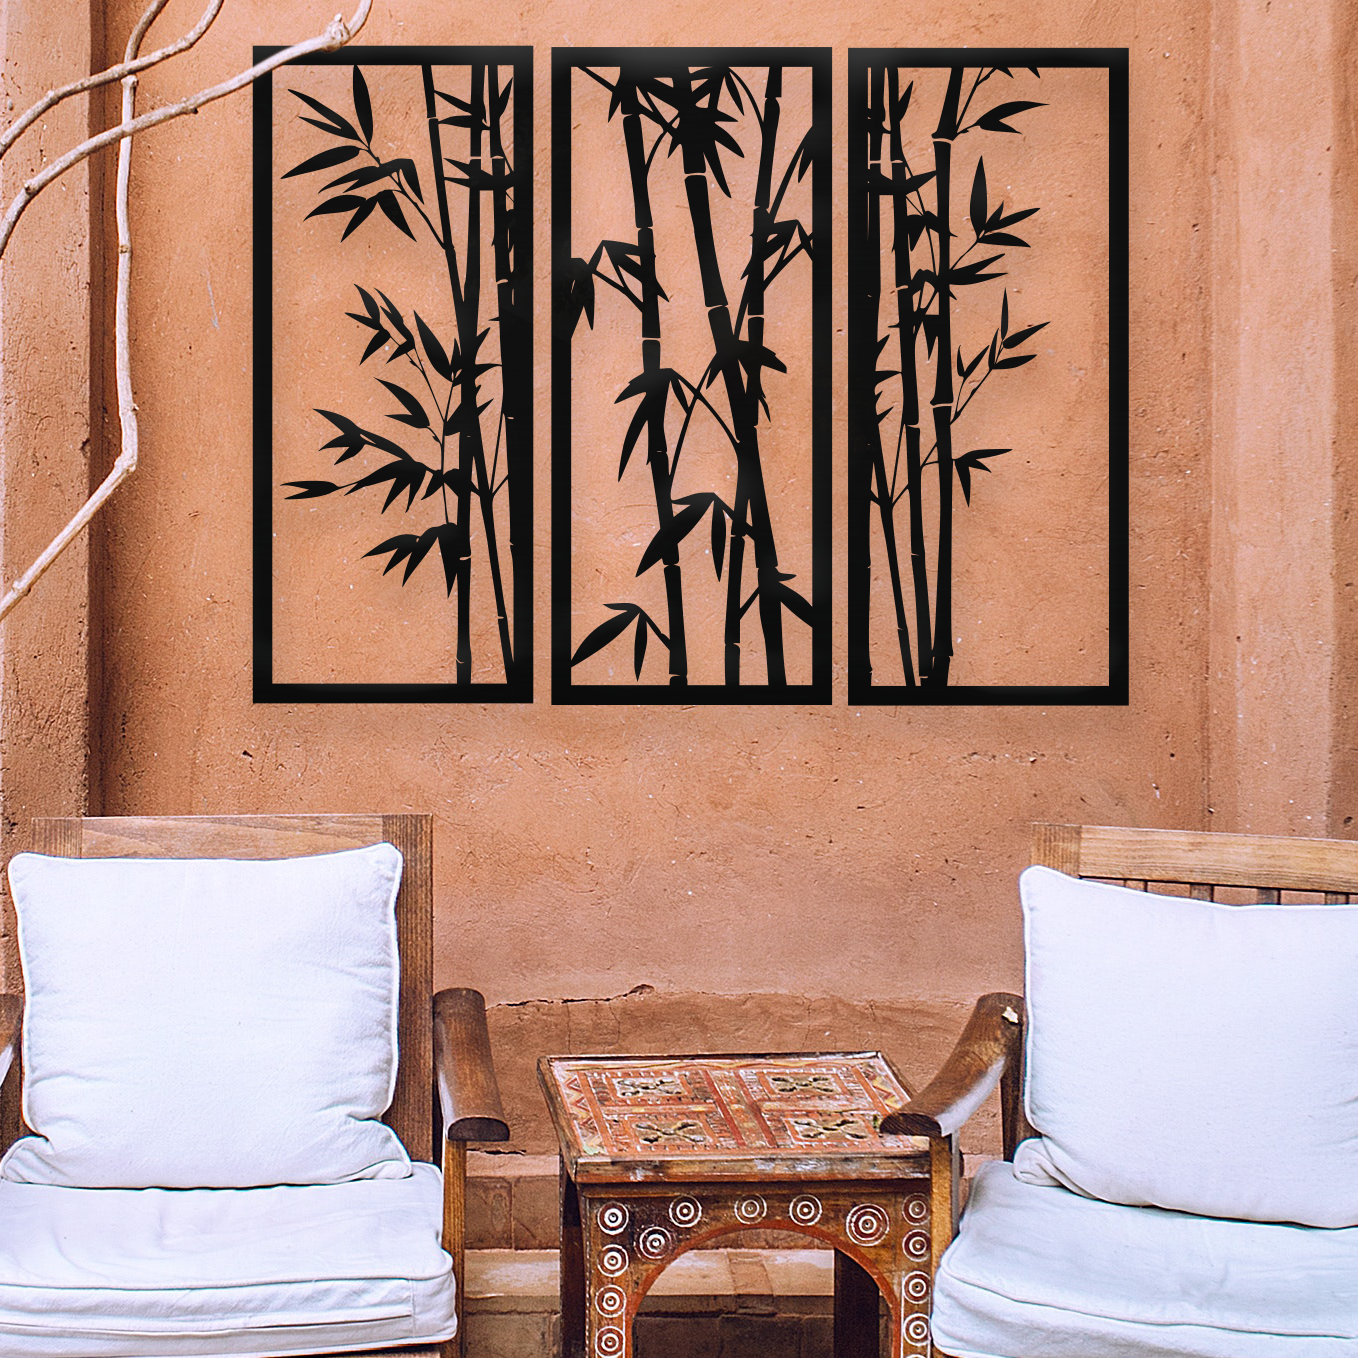 Custom Photo Wallpaper Bamboo Forest Art Wall India  Ubuy